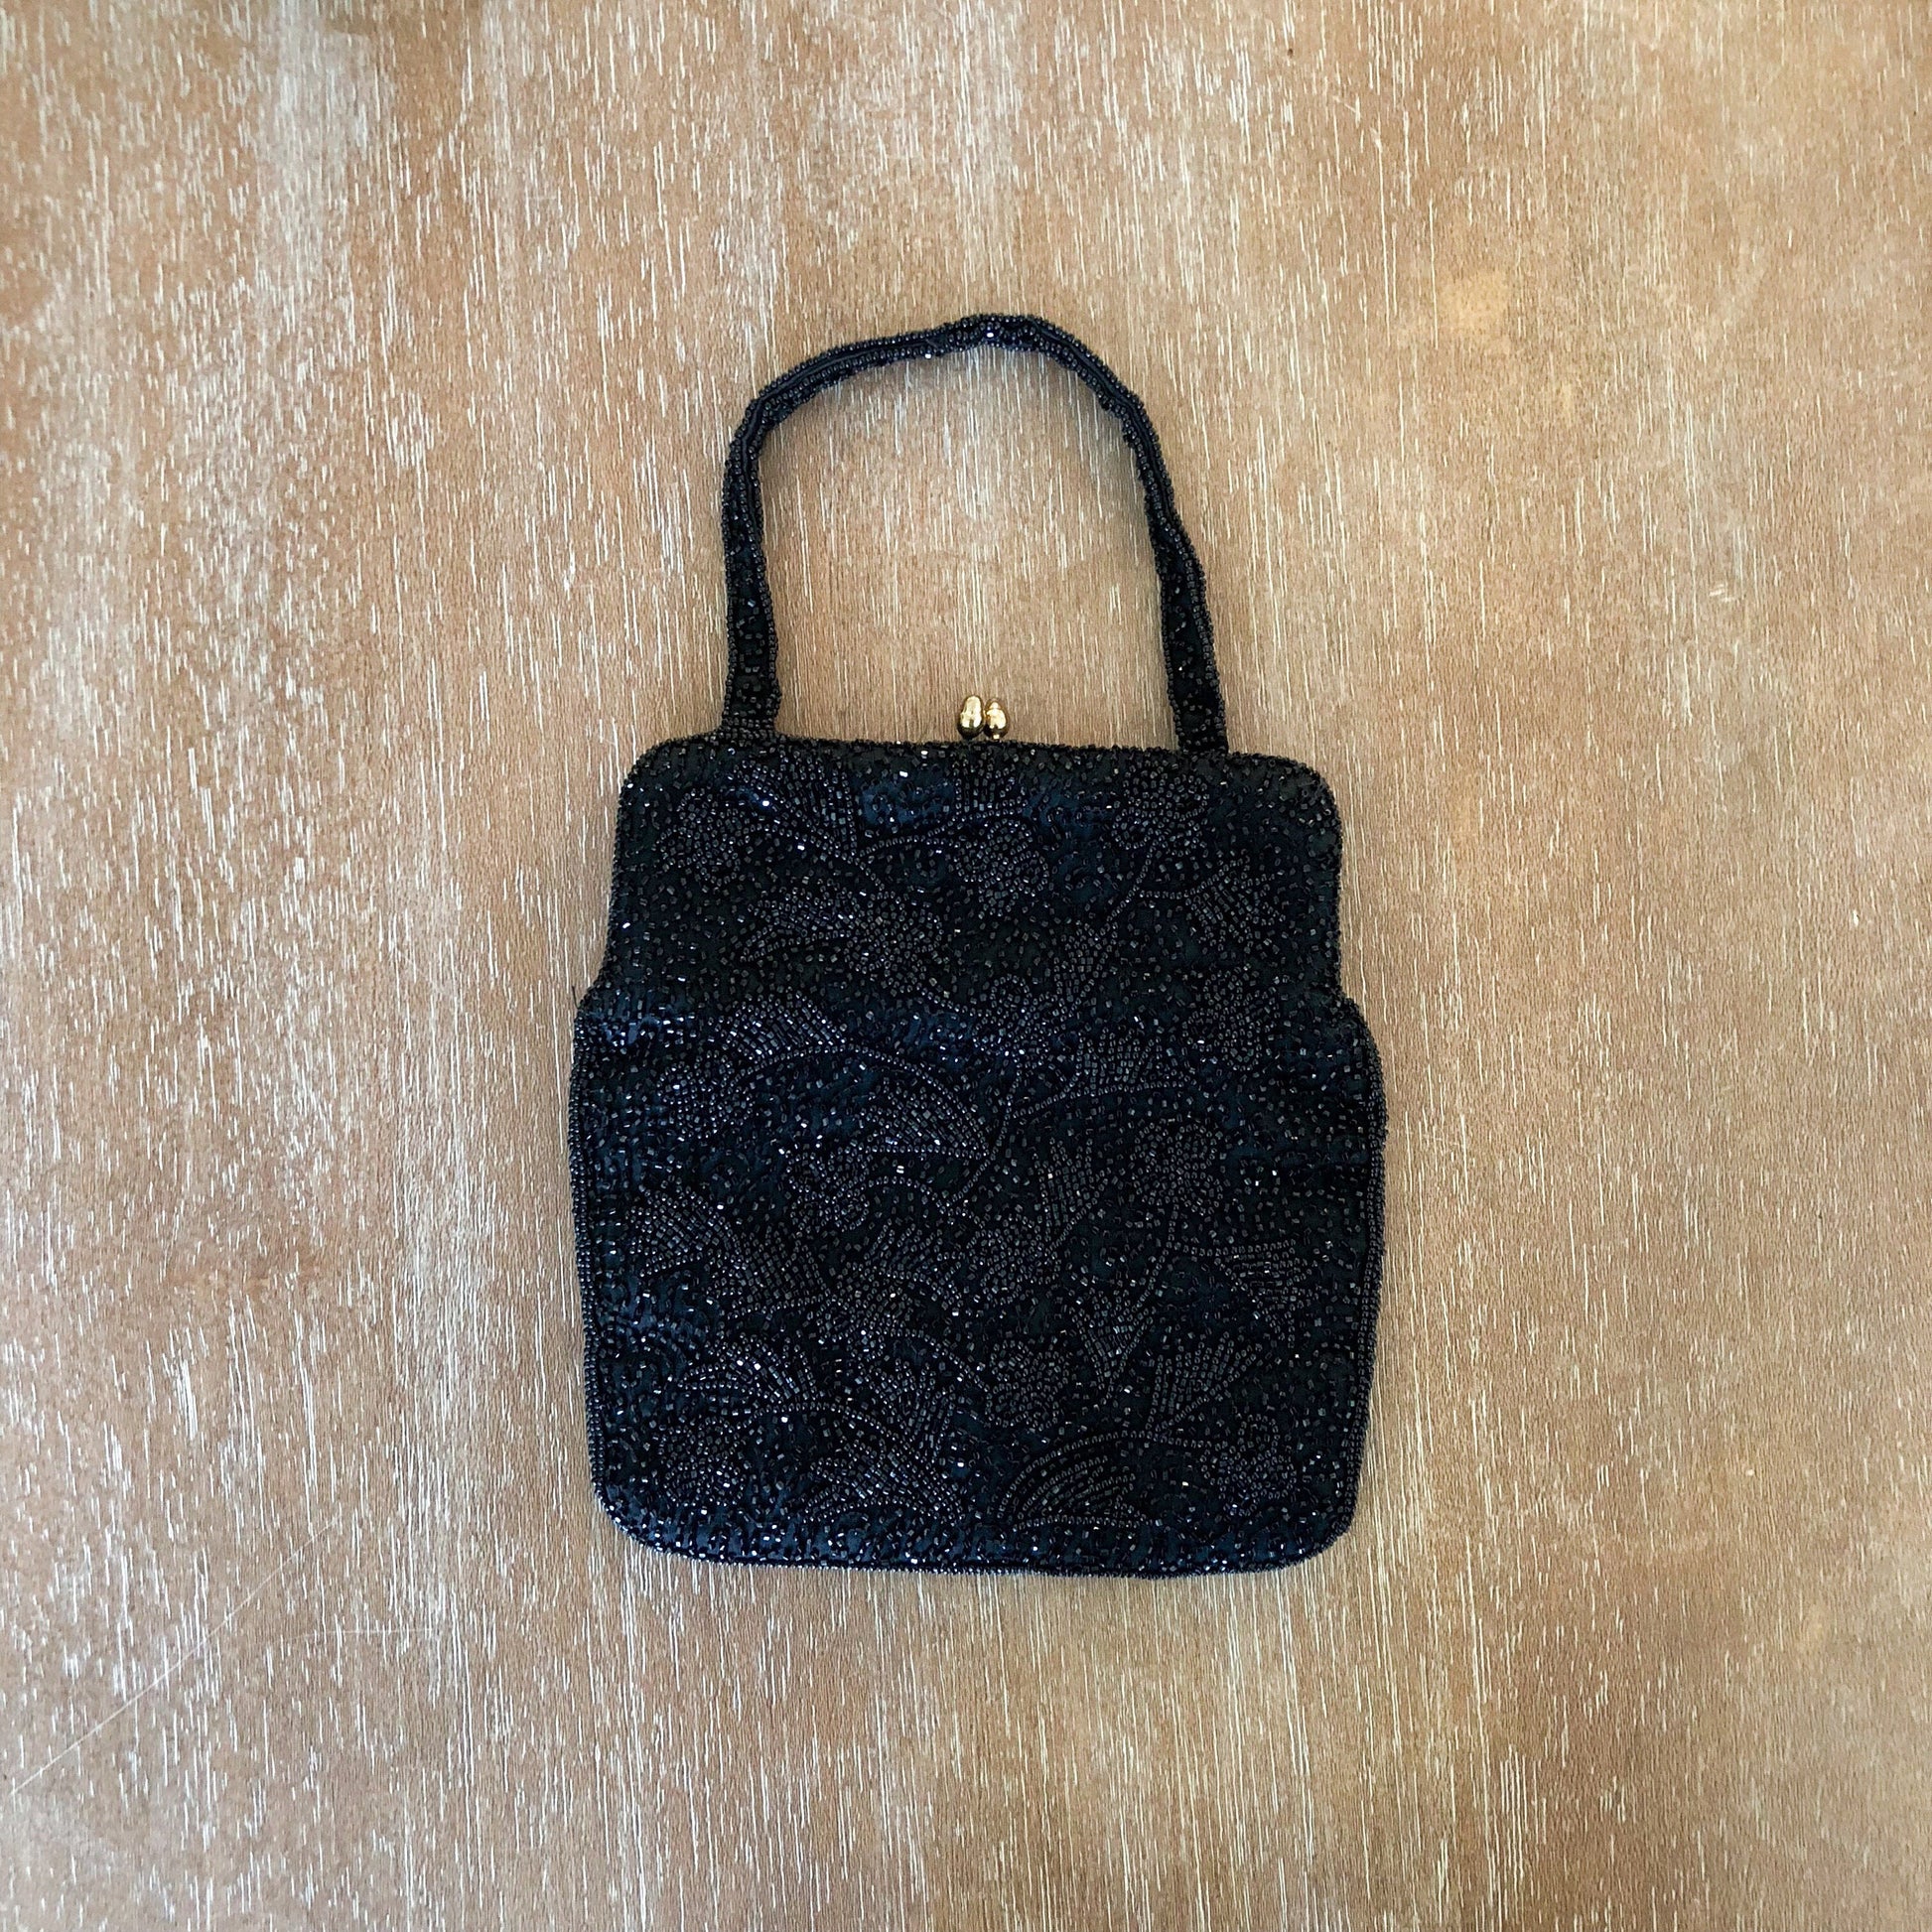 Little Black Bag | Bags, Black purses, Black bag